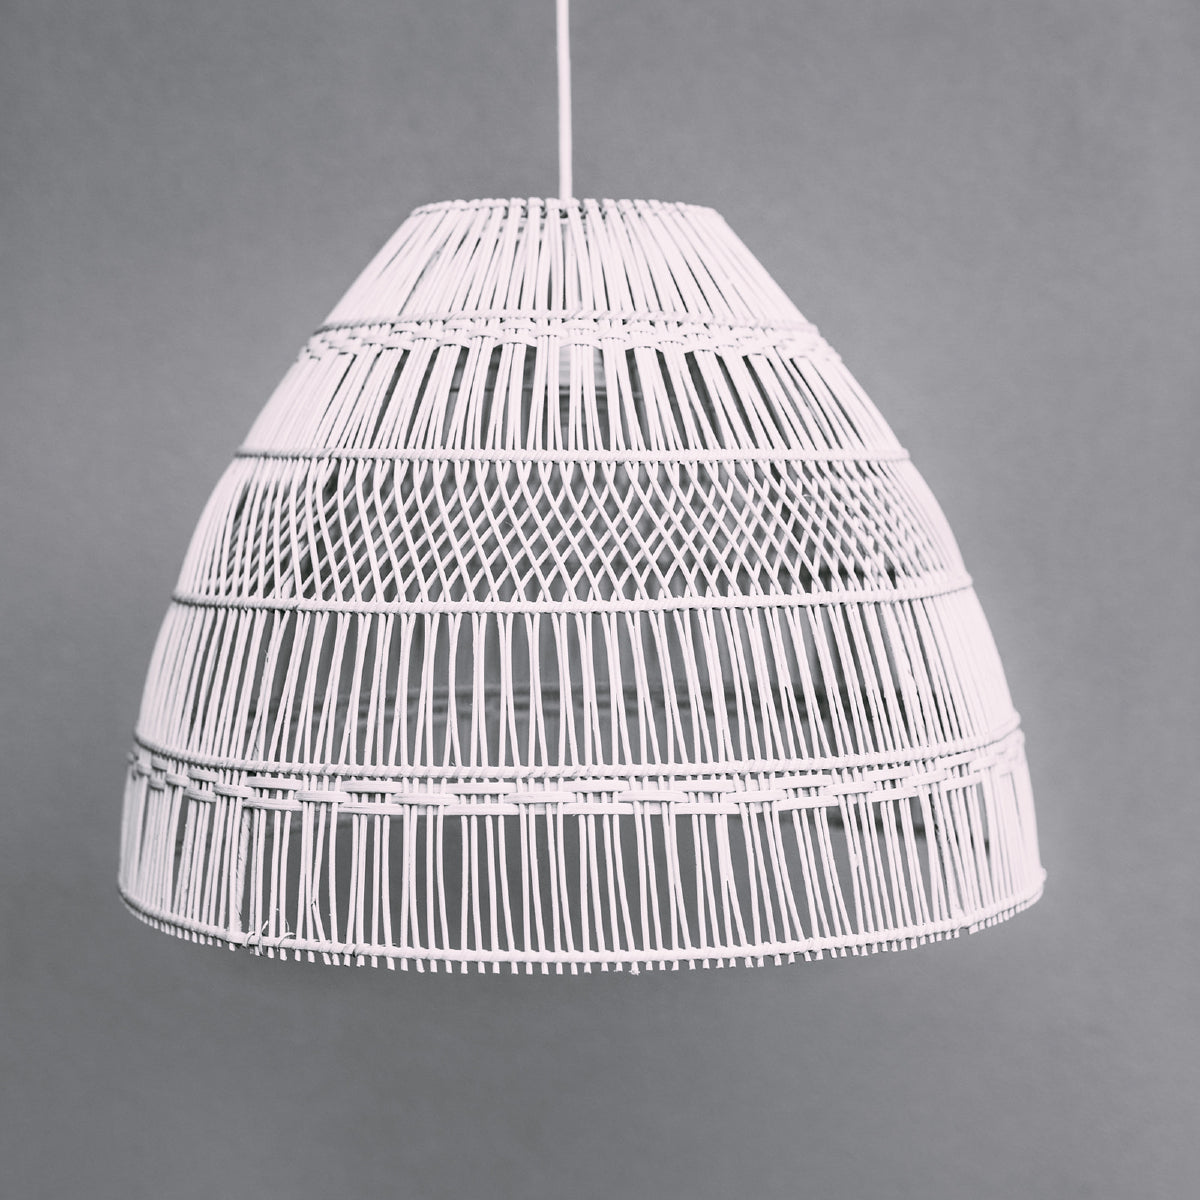 Coastal-style-lighting-white-rattan-pendant-light-with-straight-and-diamond-weave-design